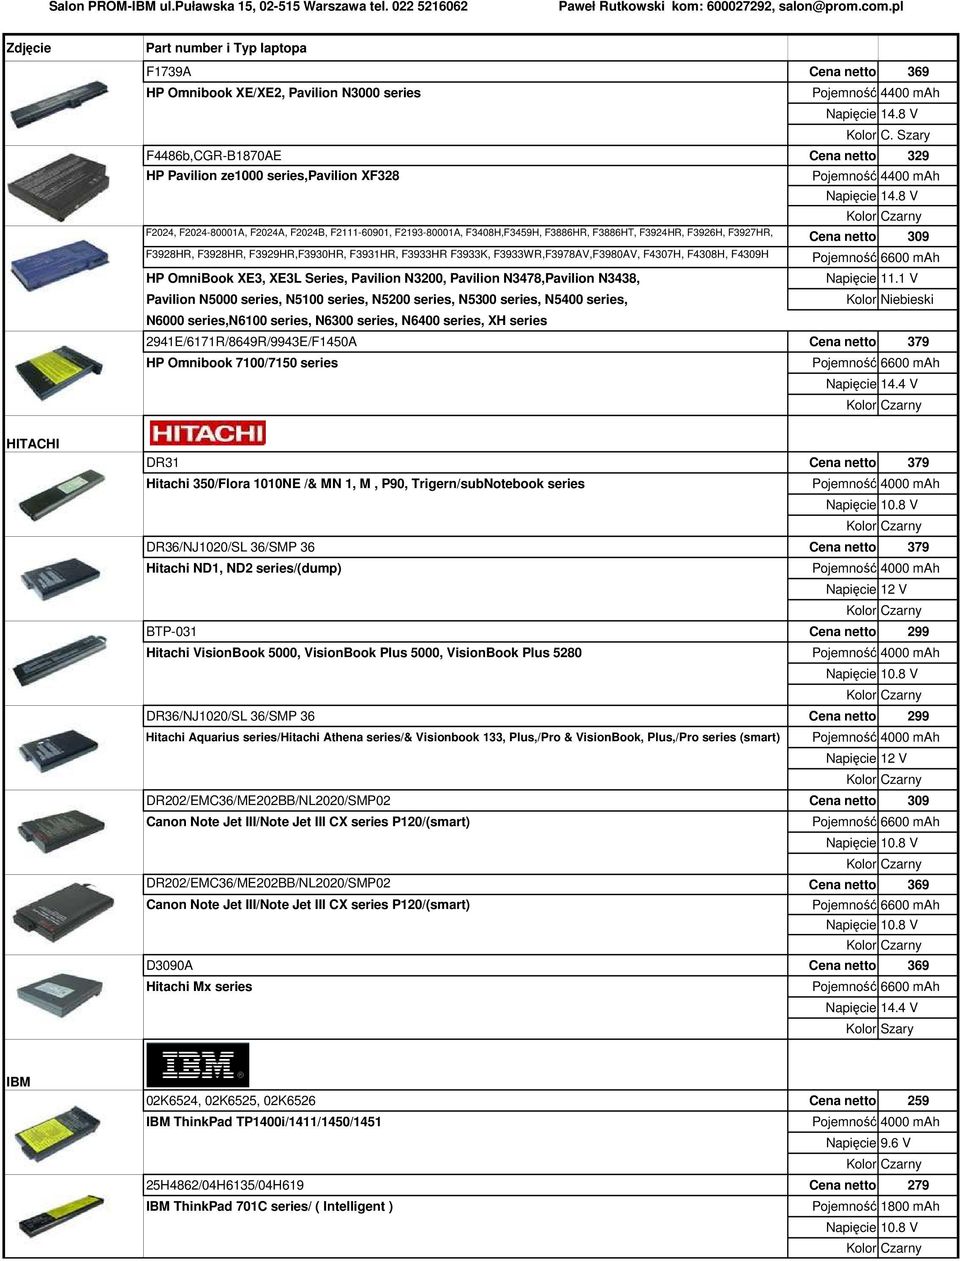 OmniBook XE3, XE3L Series, Pavilion N3200, Pavilion N3478,Pavilion N3438, Pavilion N5000 series, N5100 series, N5200 series, N5300 series, N5400 series, N6000 series,n6100 series, N6300 series, N6400